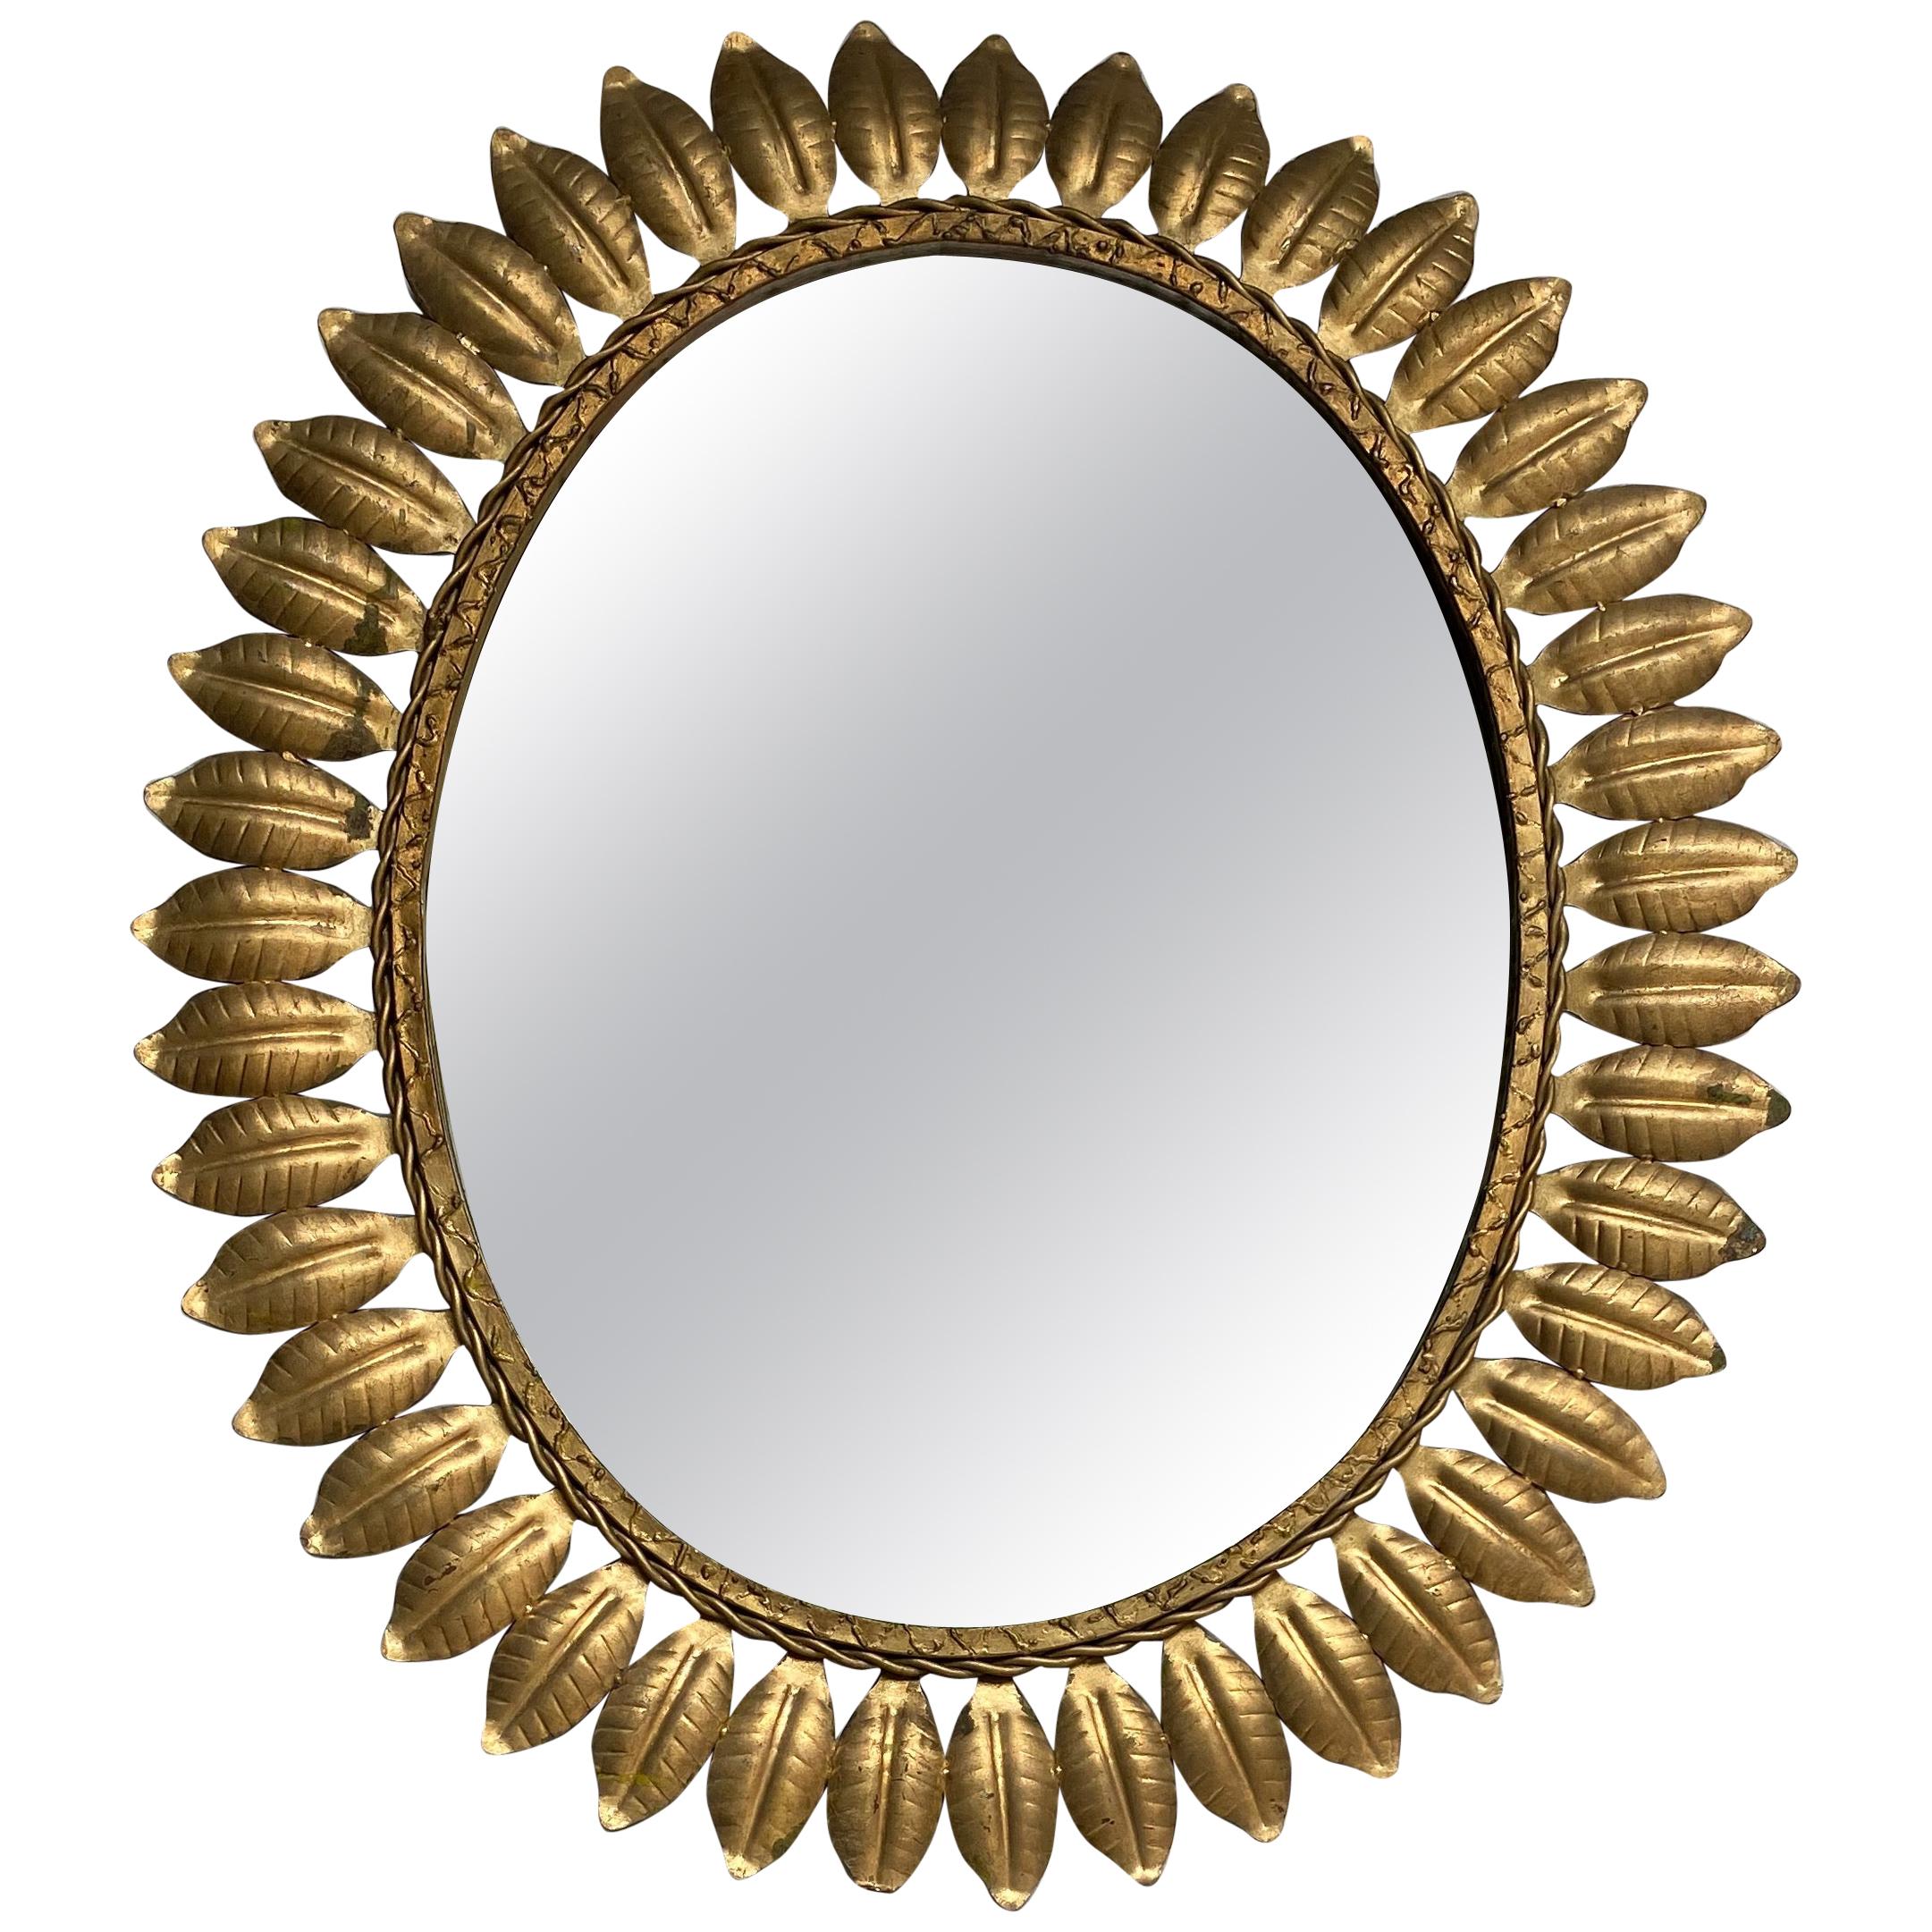 Large Oval Gilt Metal Sunburst Mirror with Leaves